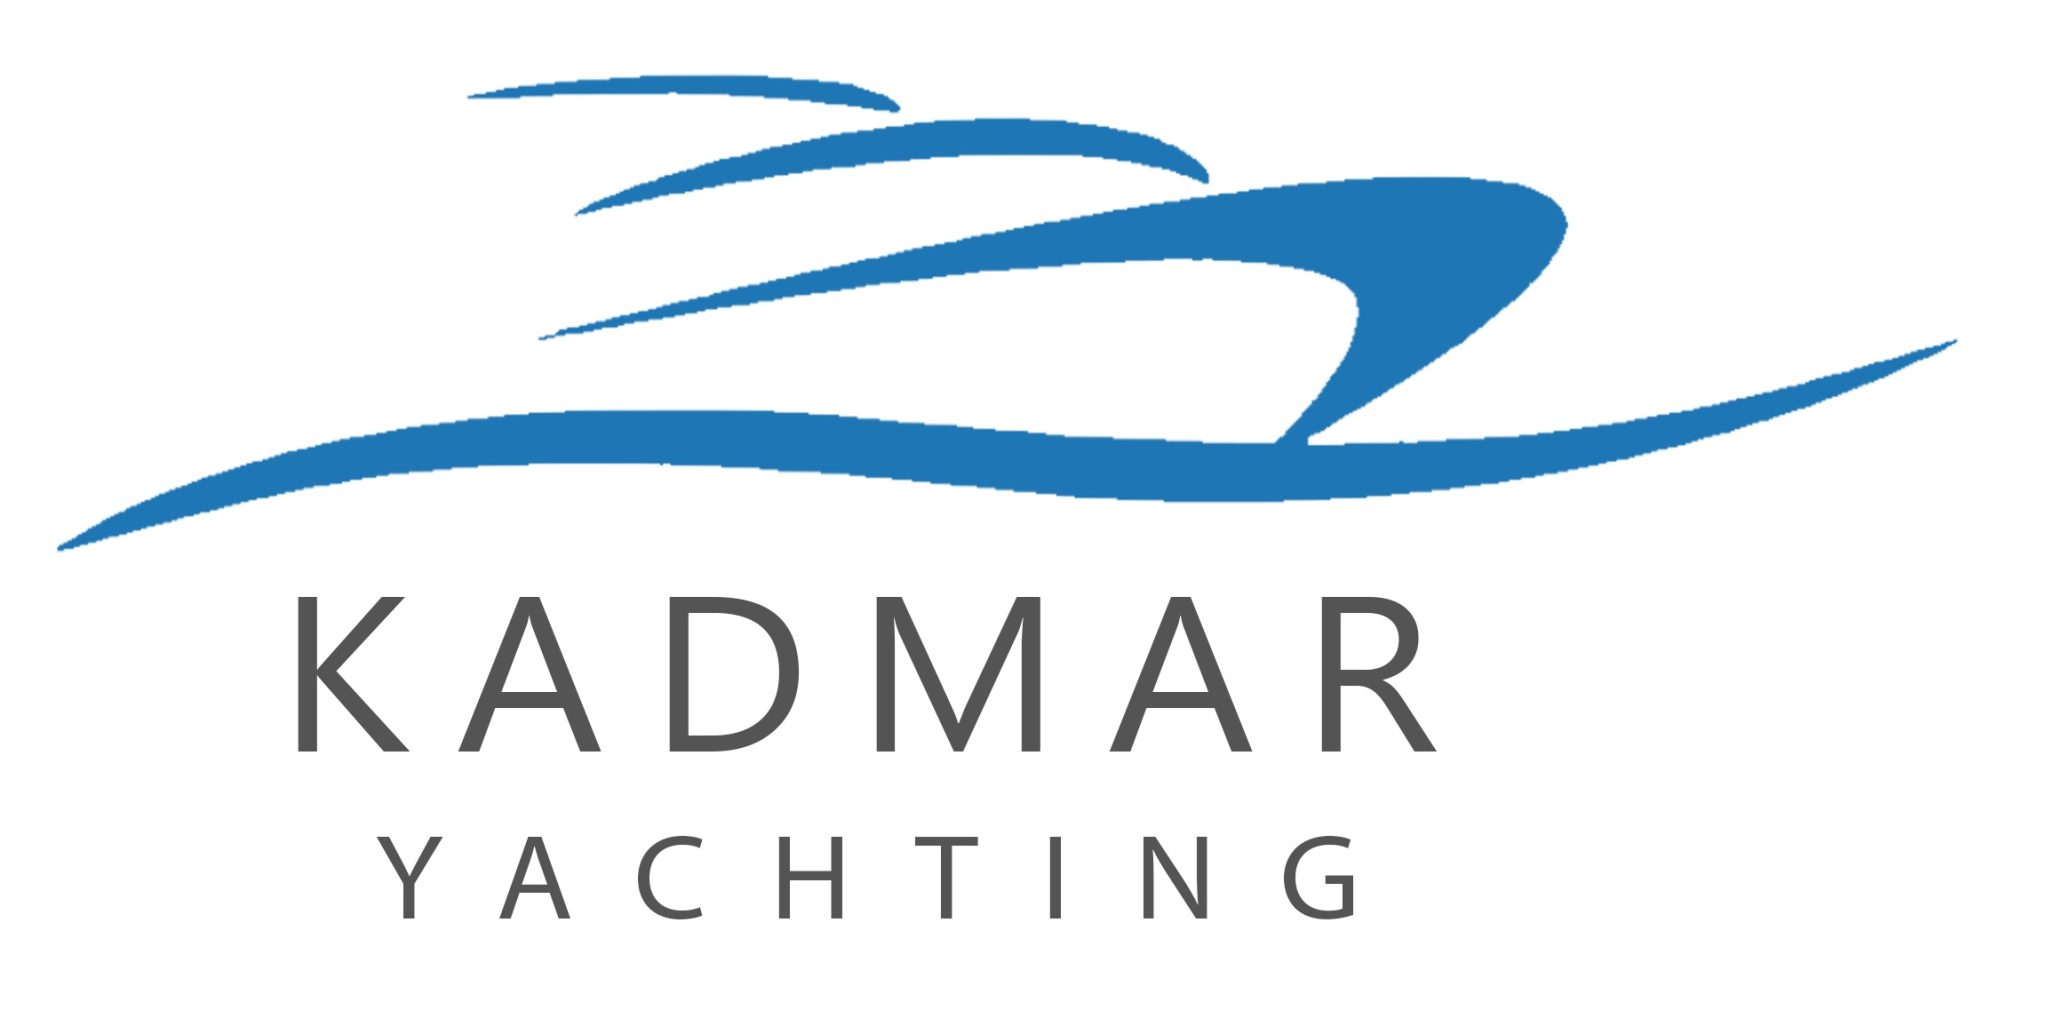 Kadmar Yachting scaled